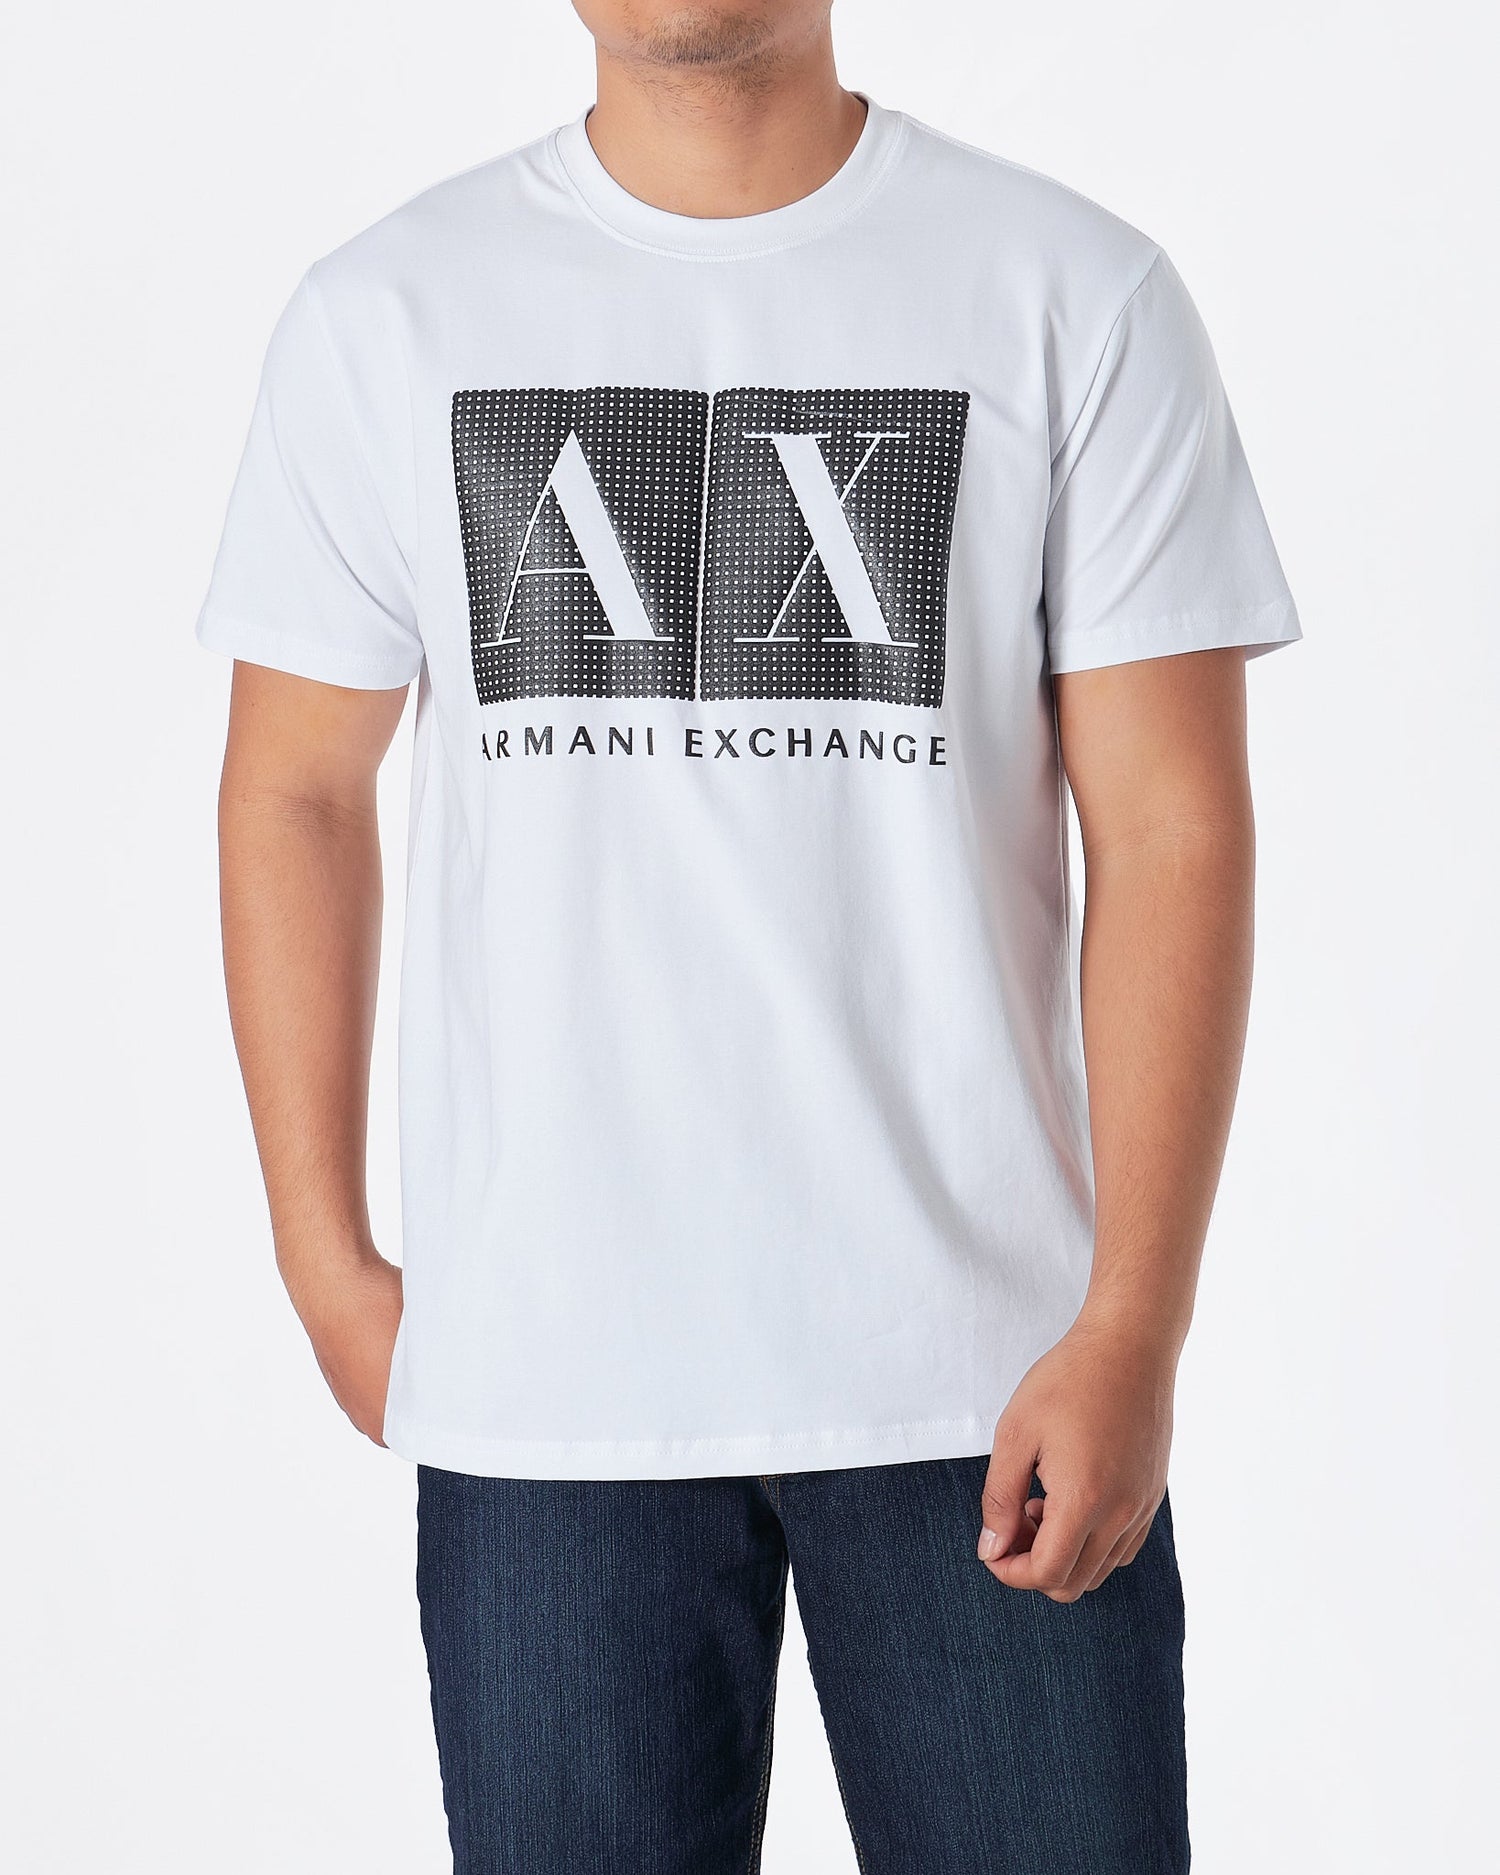 MOI OUTFIT-ARM Exchange Men White T-Shirt 17.90